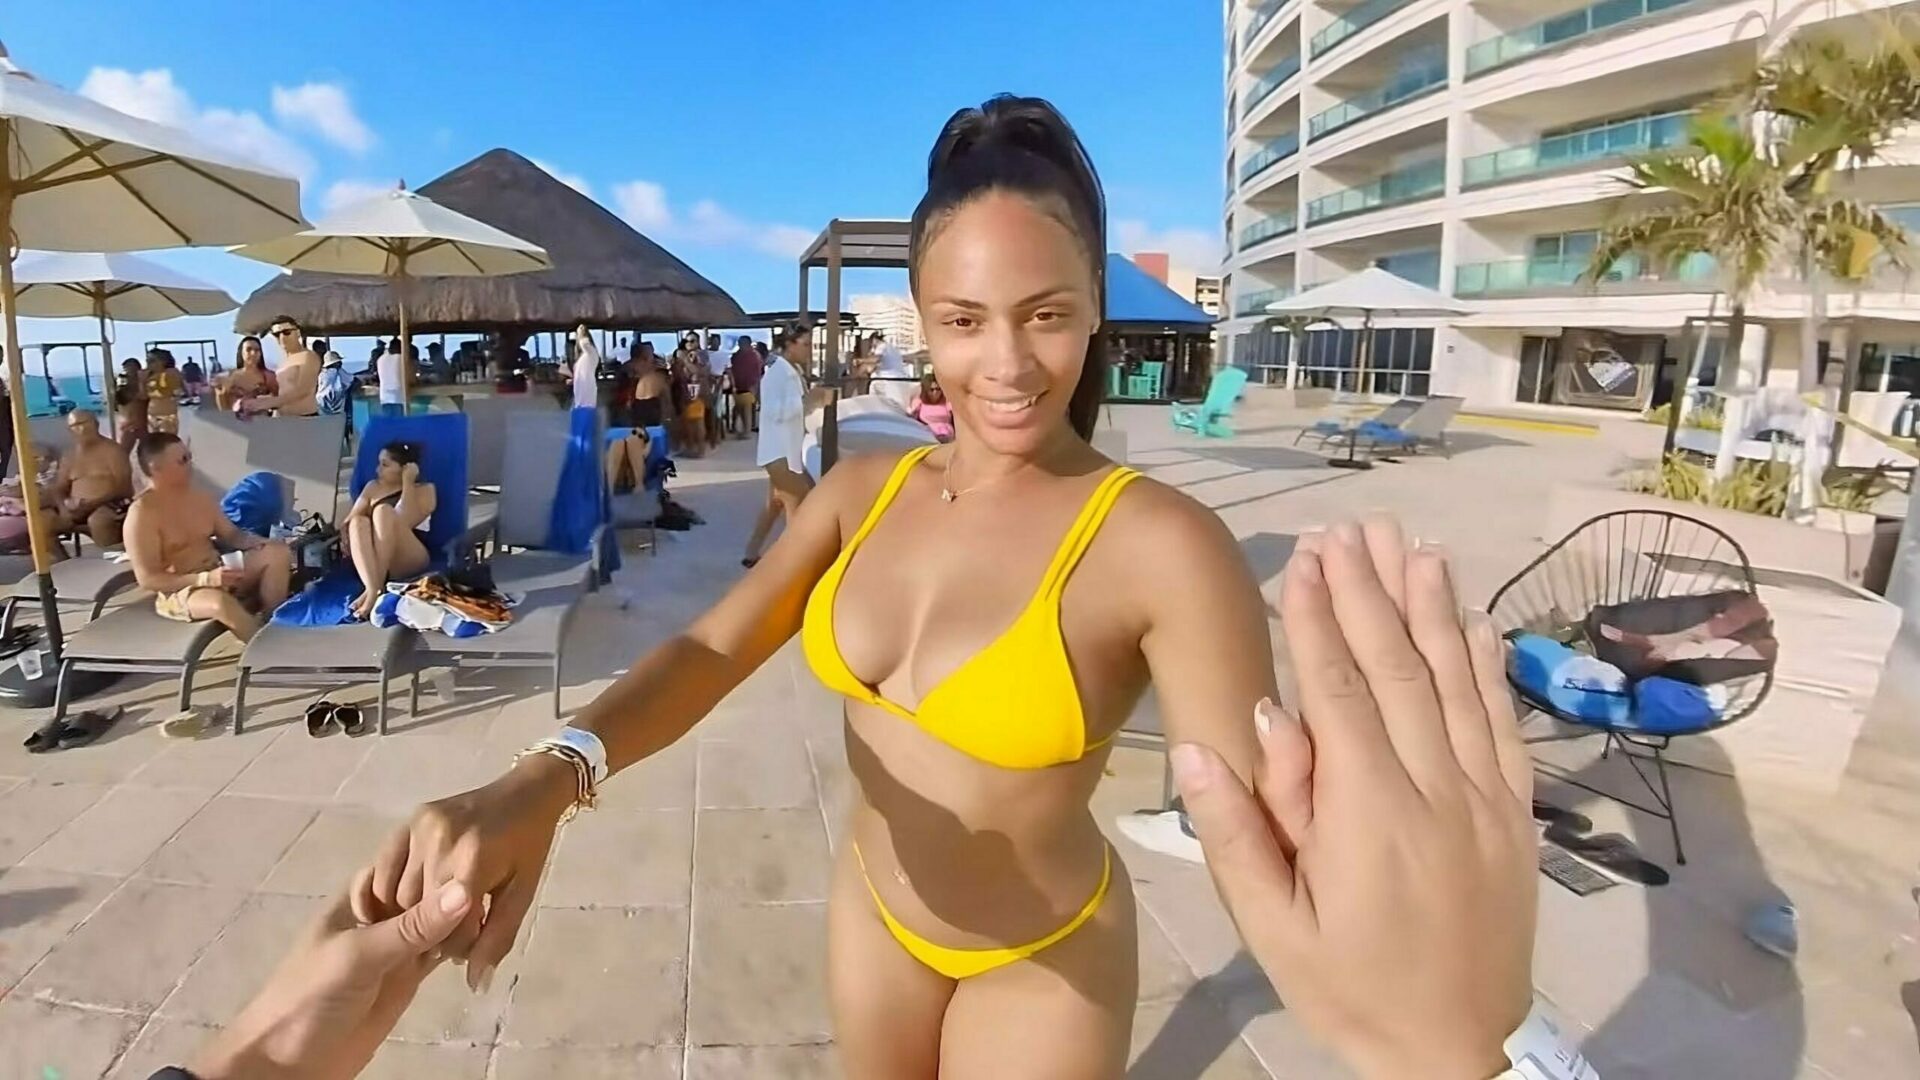 First person view of a dance with a beautiful Cuban woman in yellow bikini